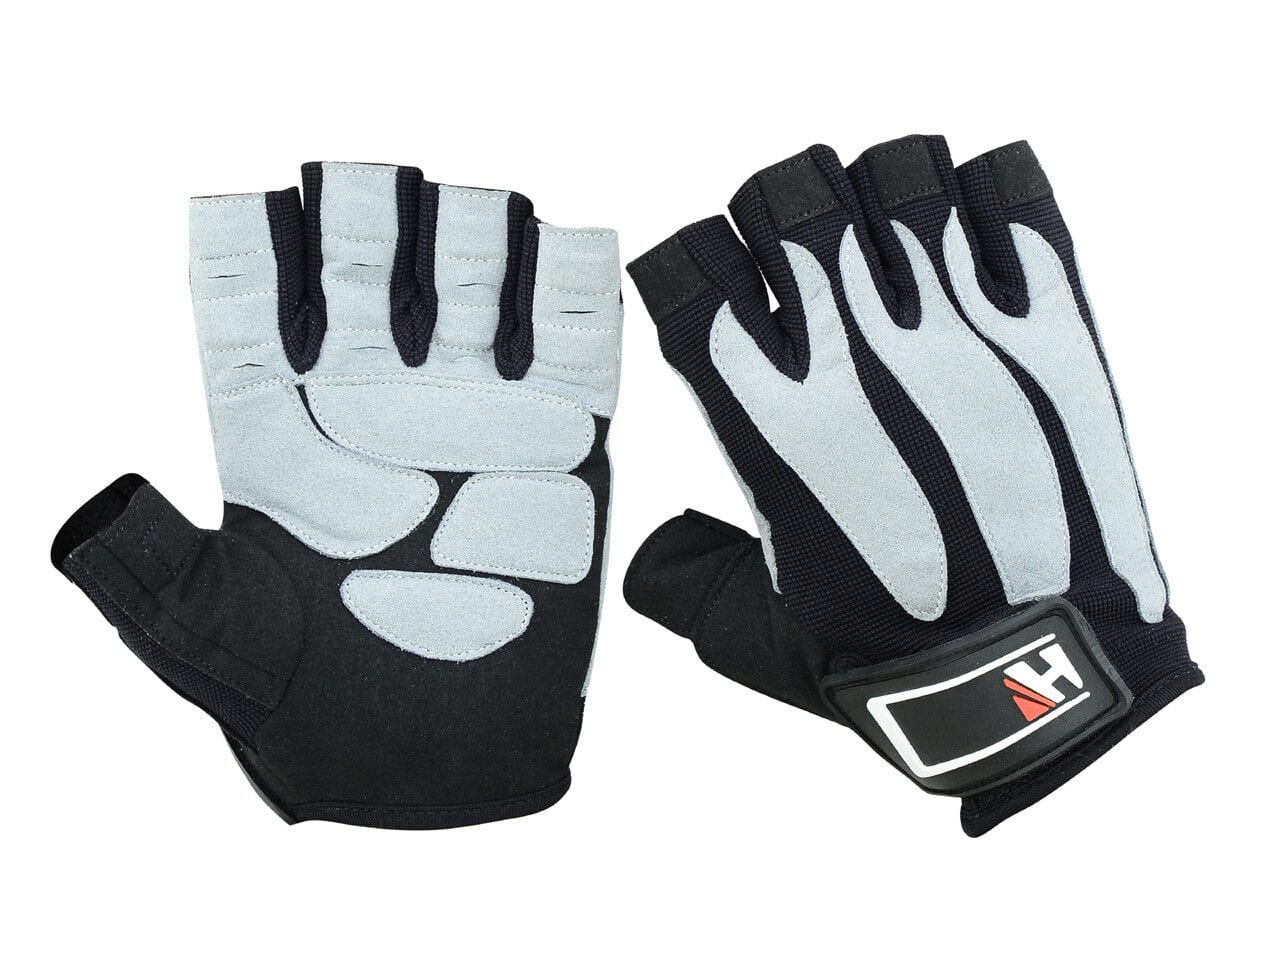 Buy Gloves Gym For Men & Women Leather Pair